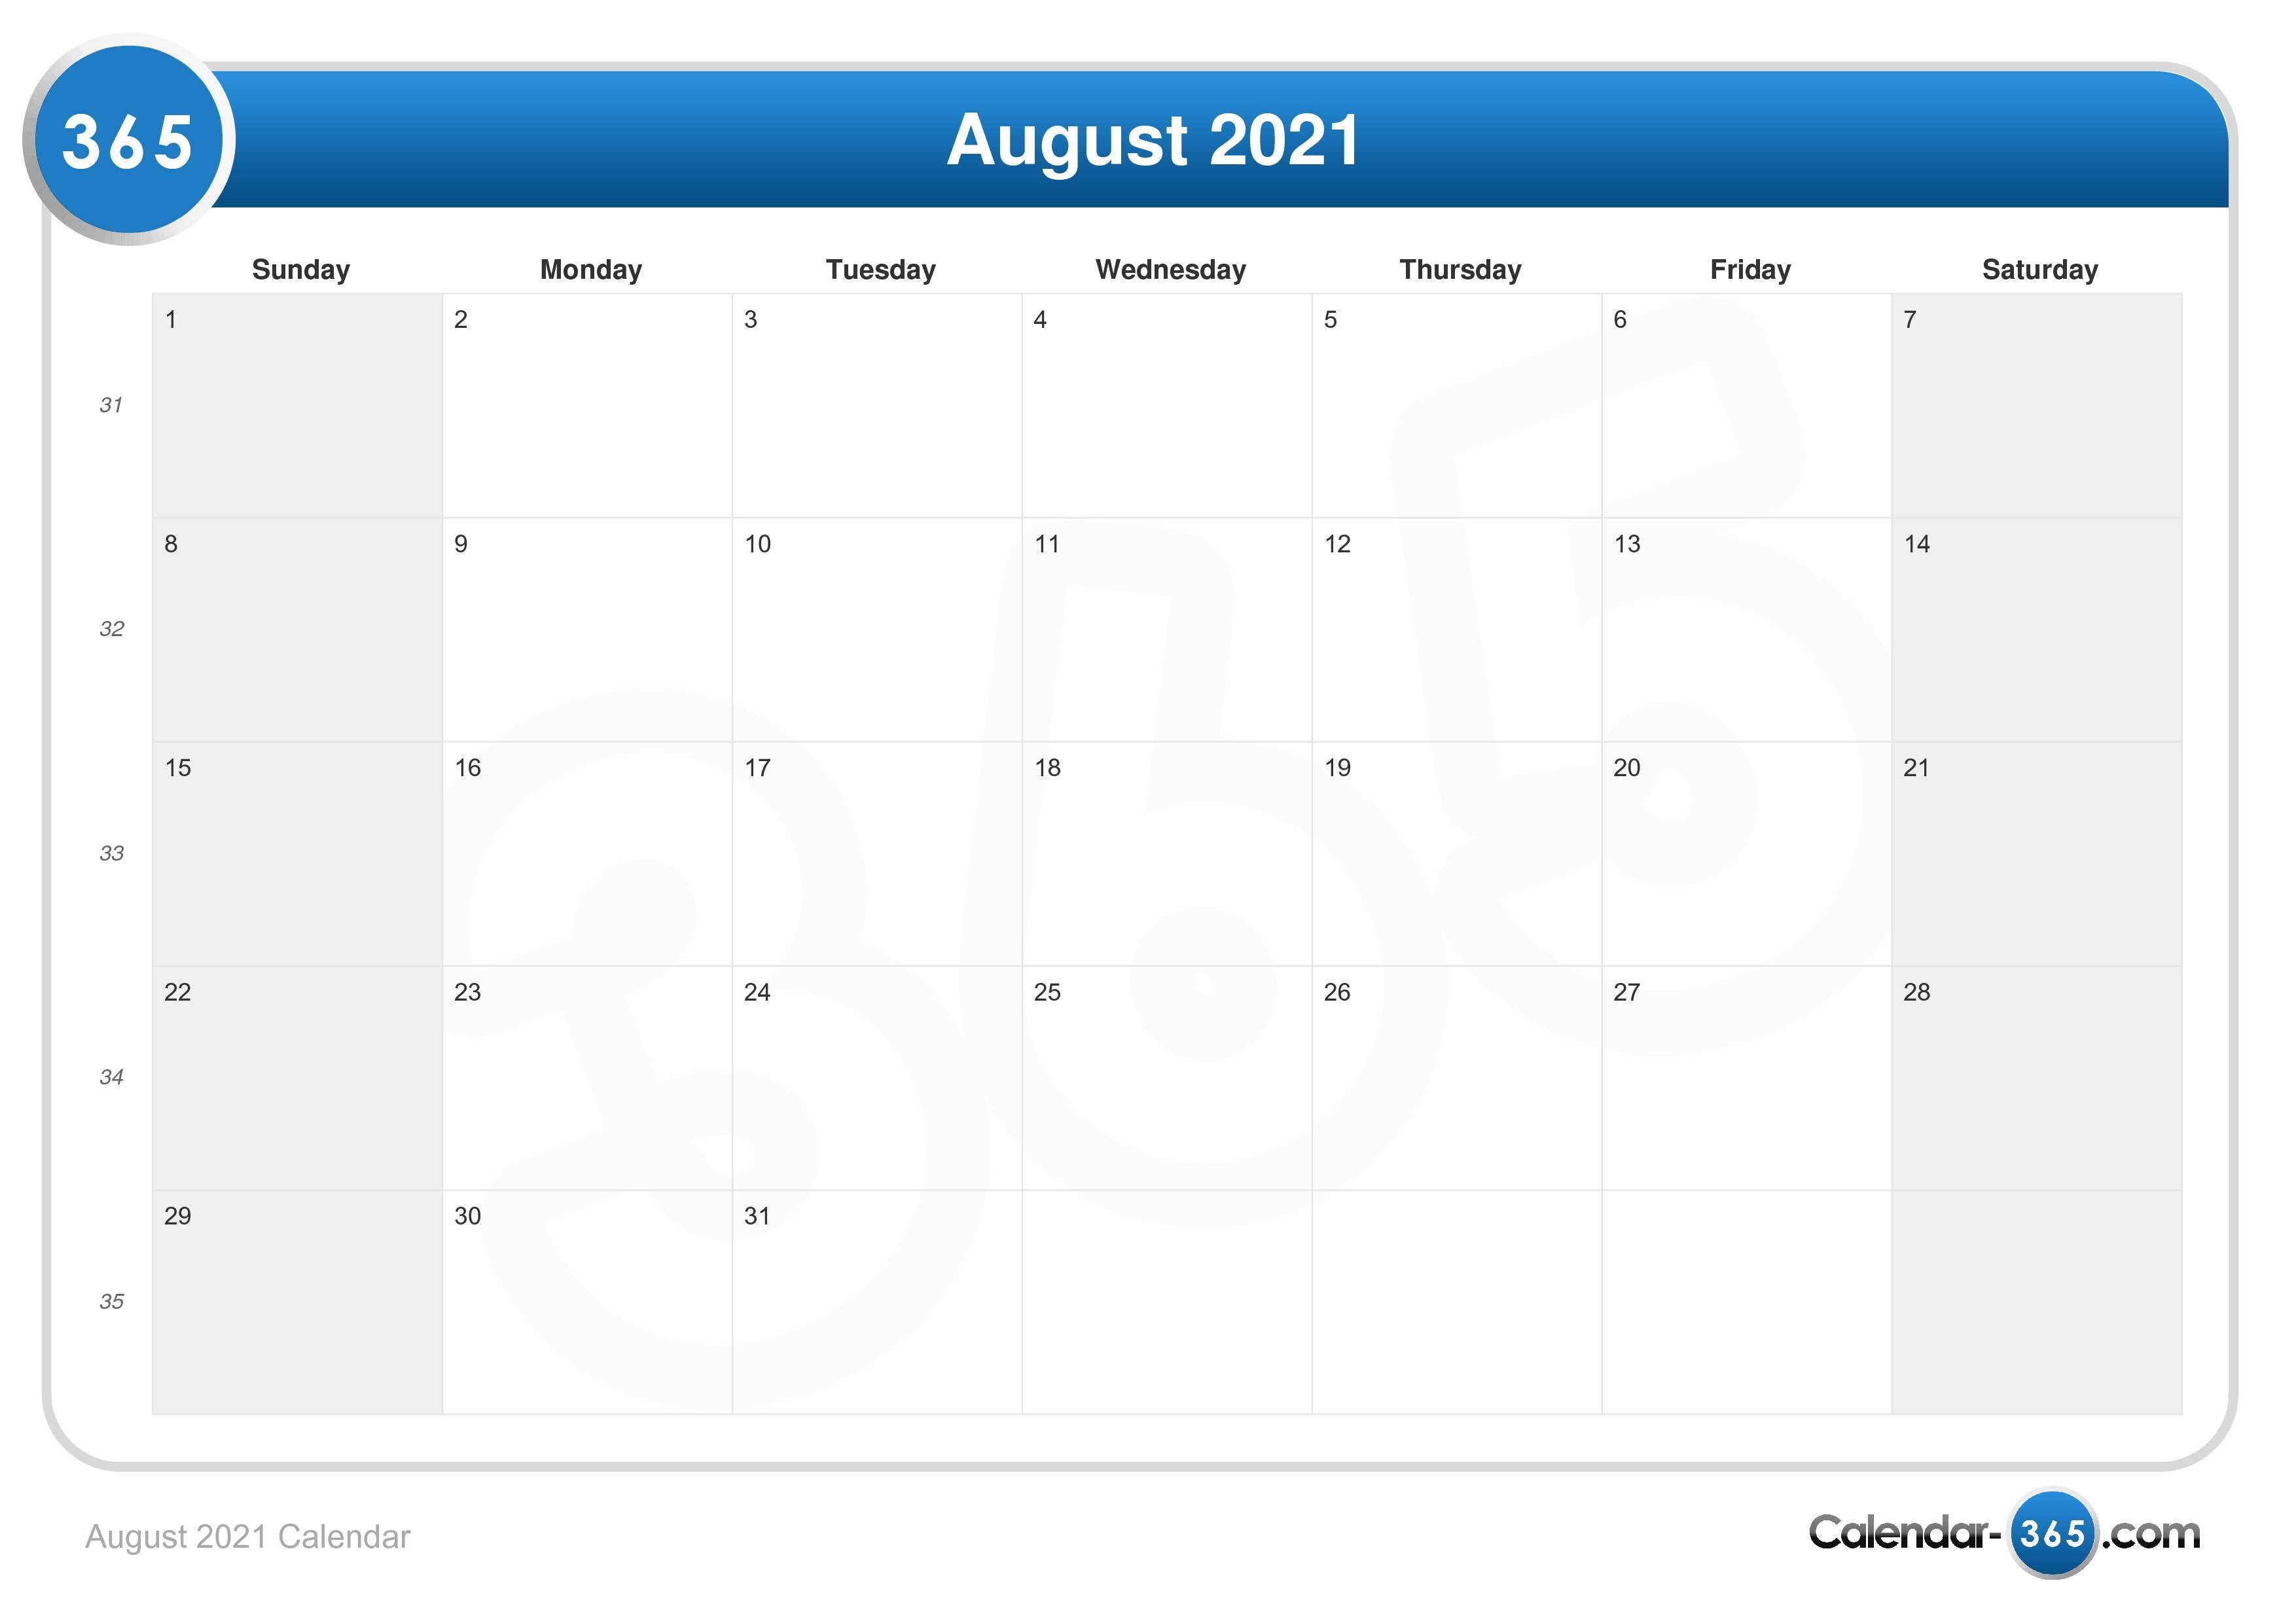 August 2021 31 August 31,